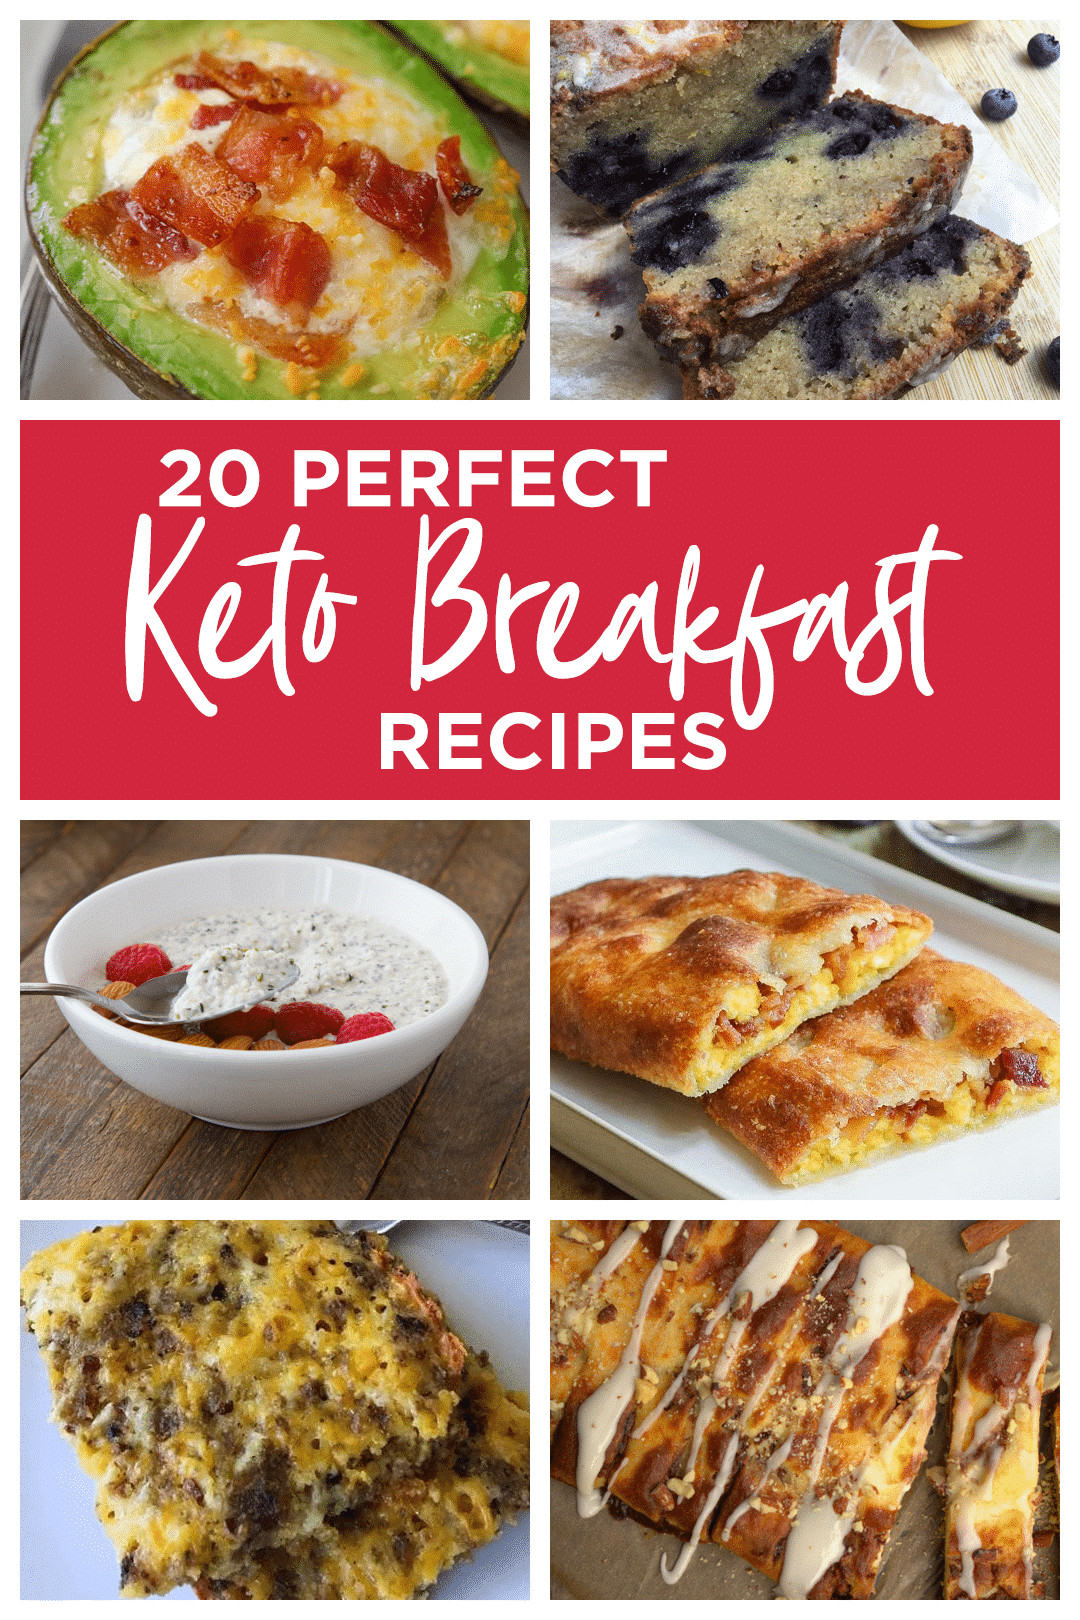 Low Carb Keto Breakfast
 Keto Breakfast Recipes 20 Perfect Keto & Low Carb